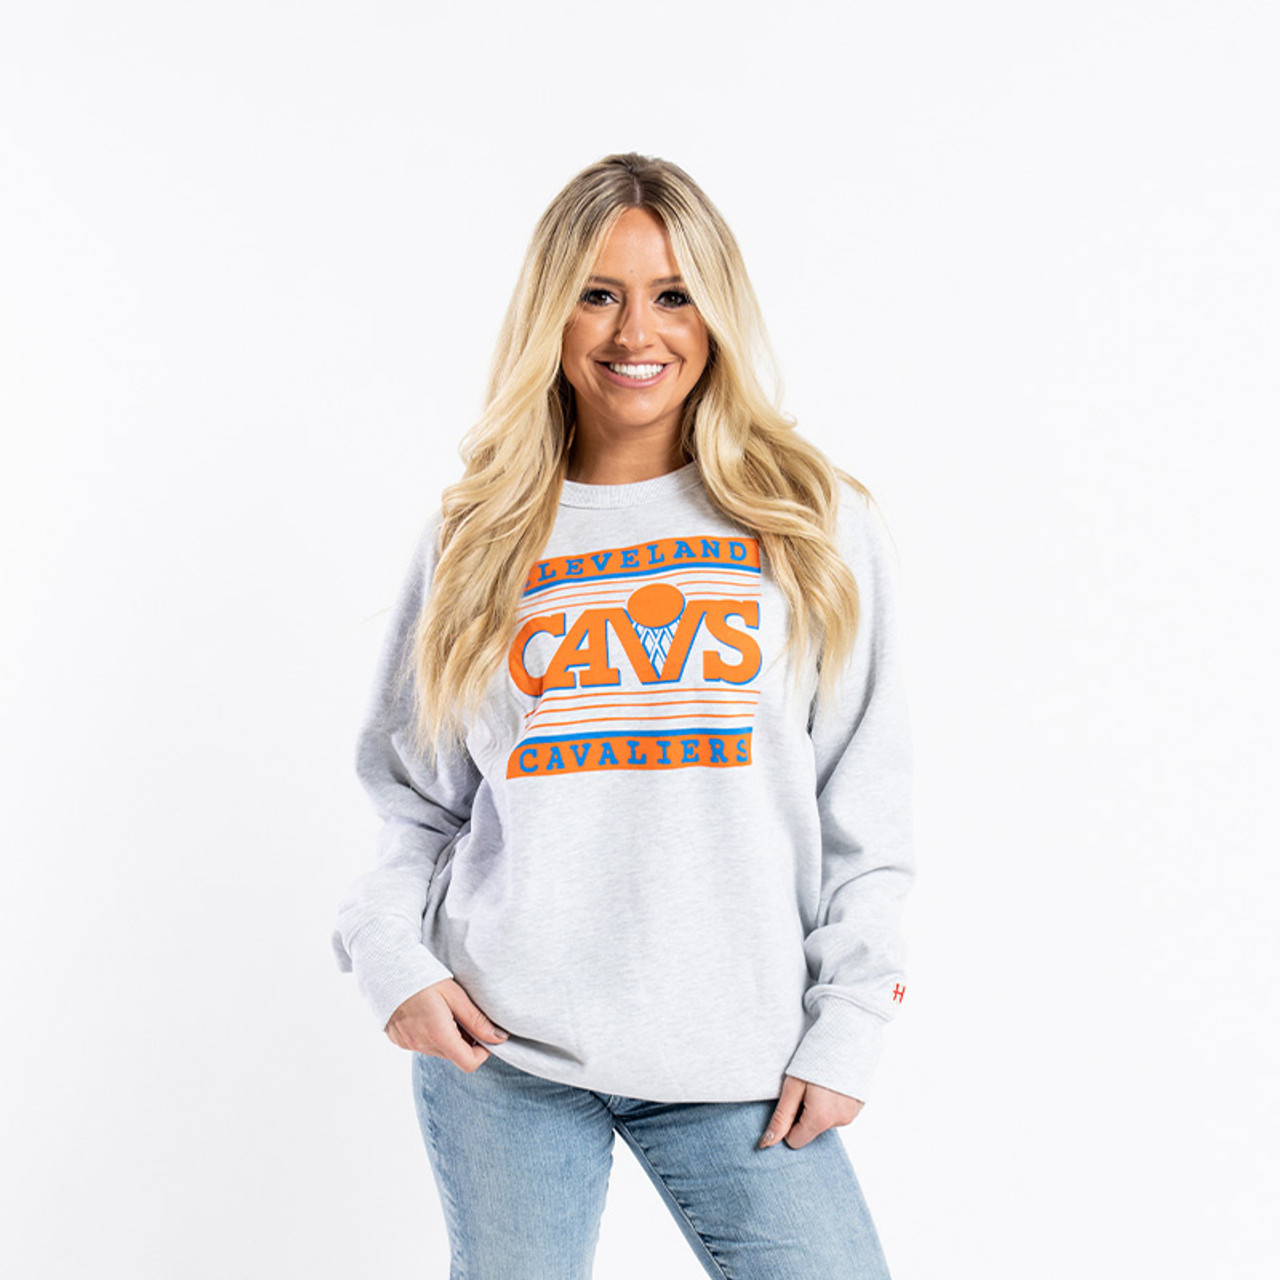 Cleveland Cavaliers Sweatshirts in Cleveland Cavaliers Team Shop 